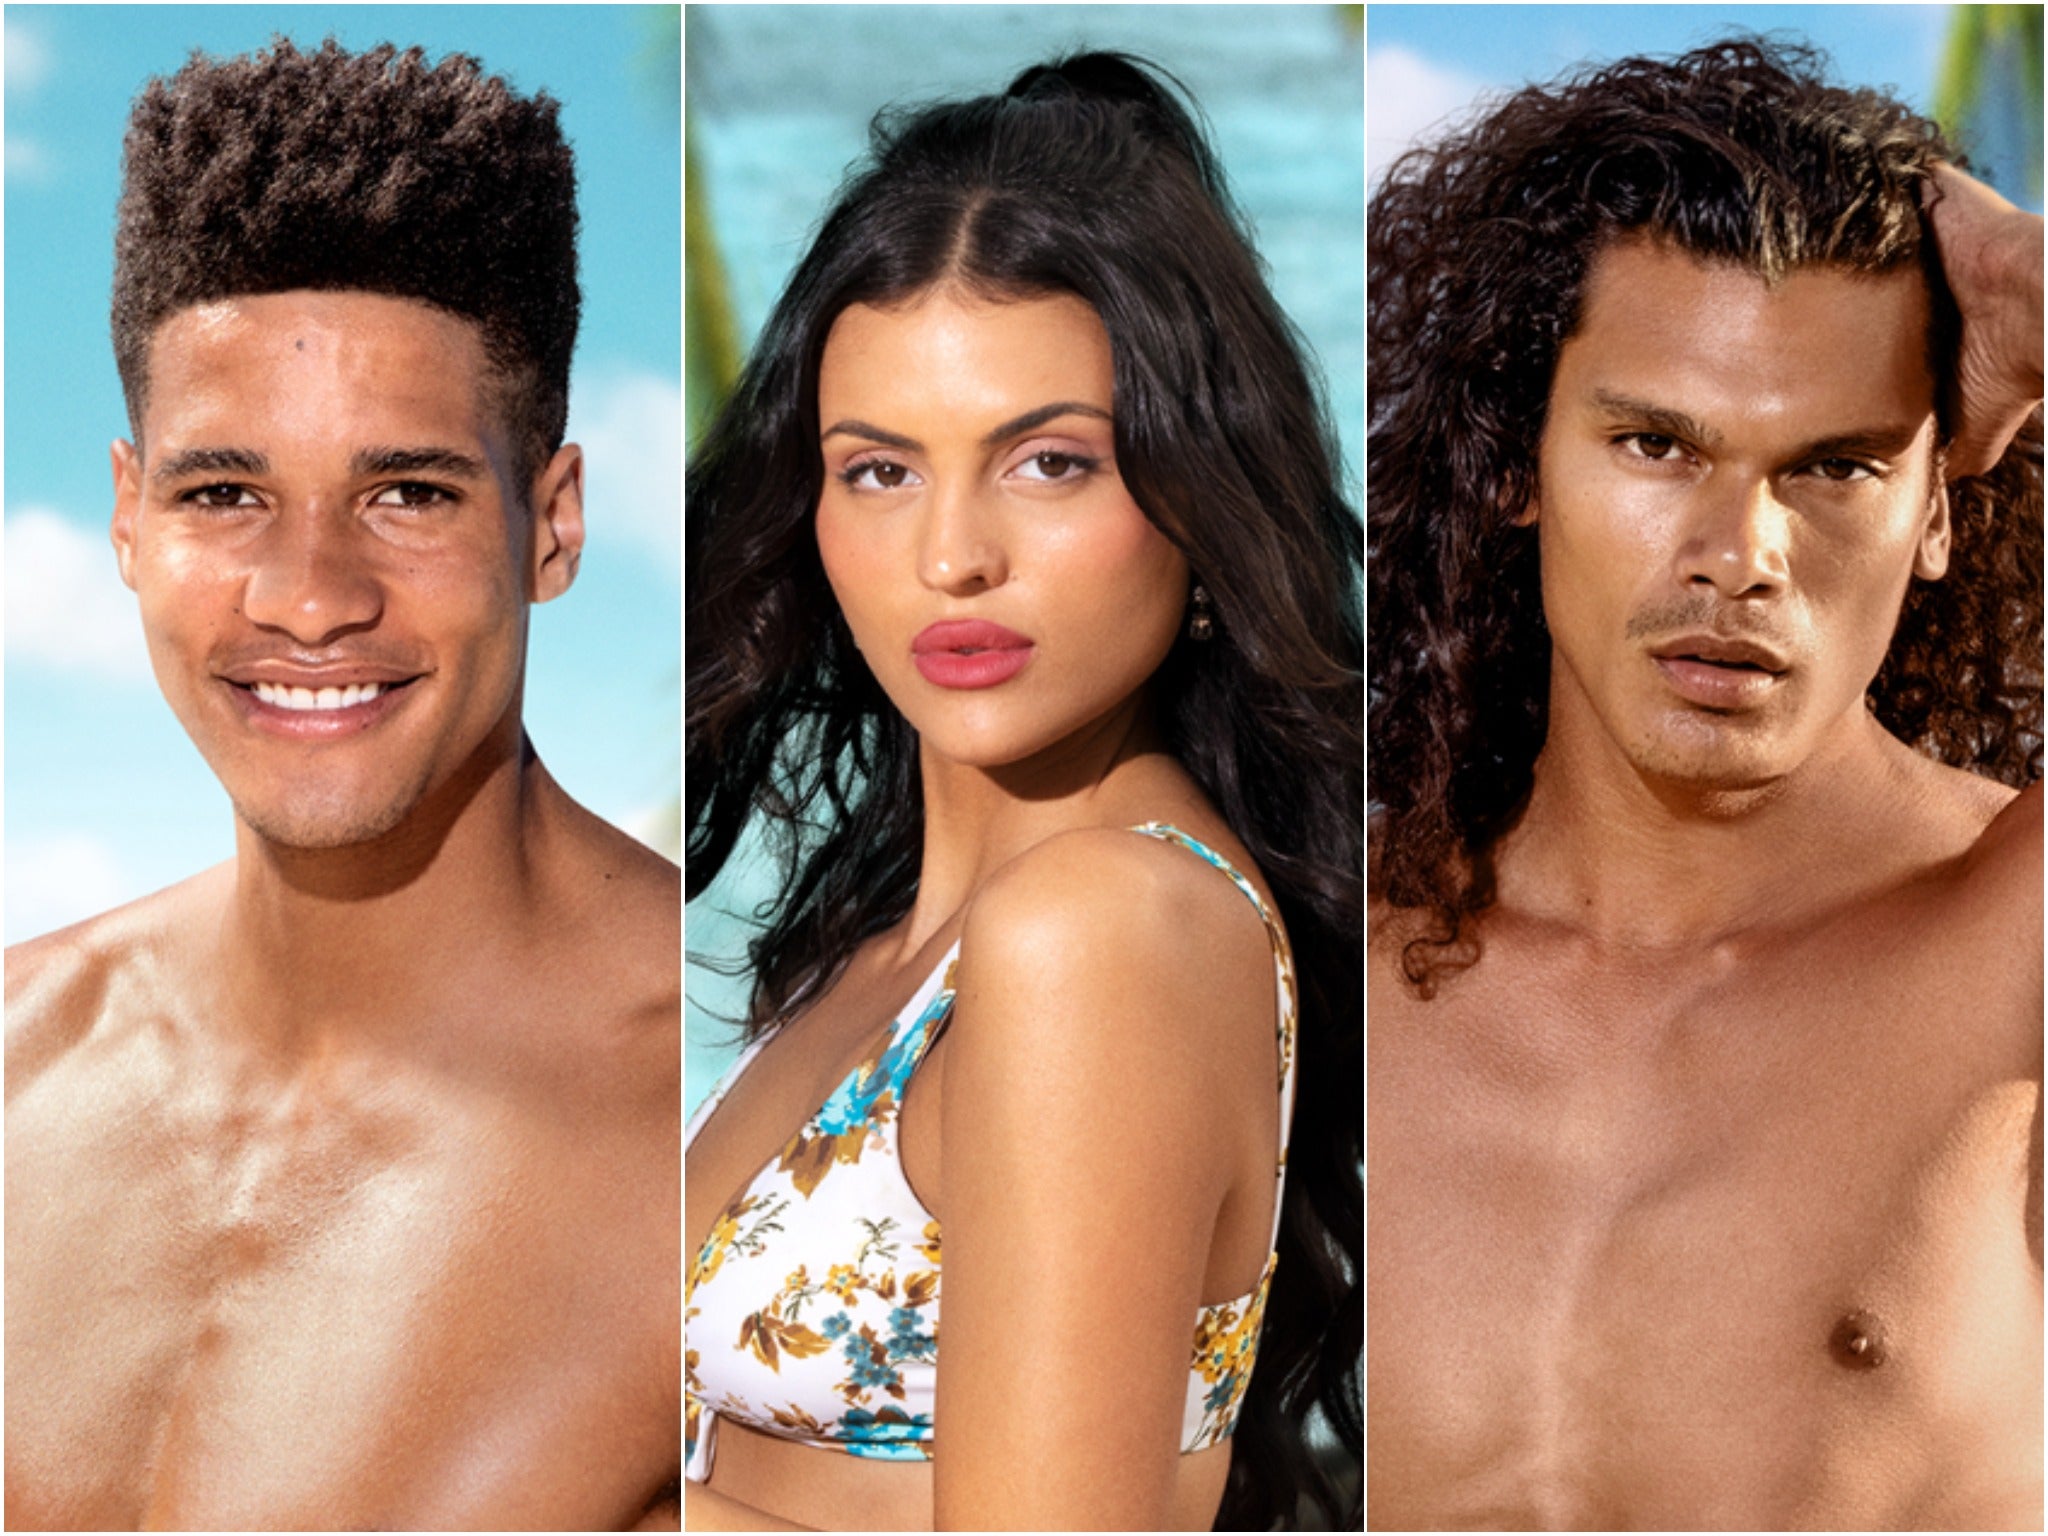 ‘Too Hot to Handle’ season three contestants (L-R) Nathan, Holly and Patrick